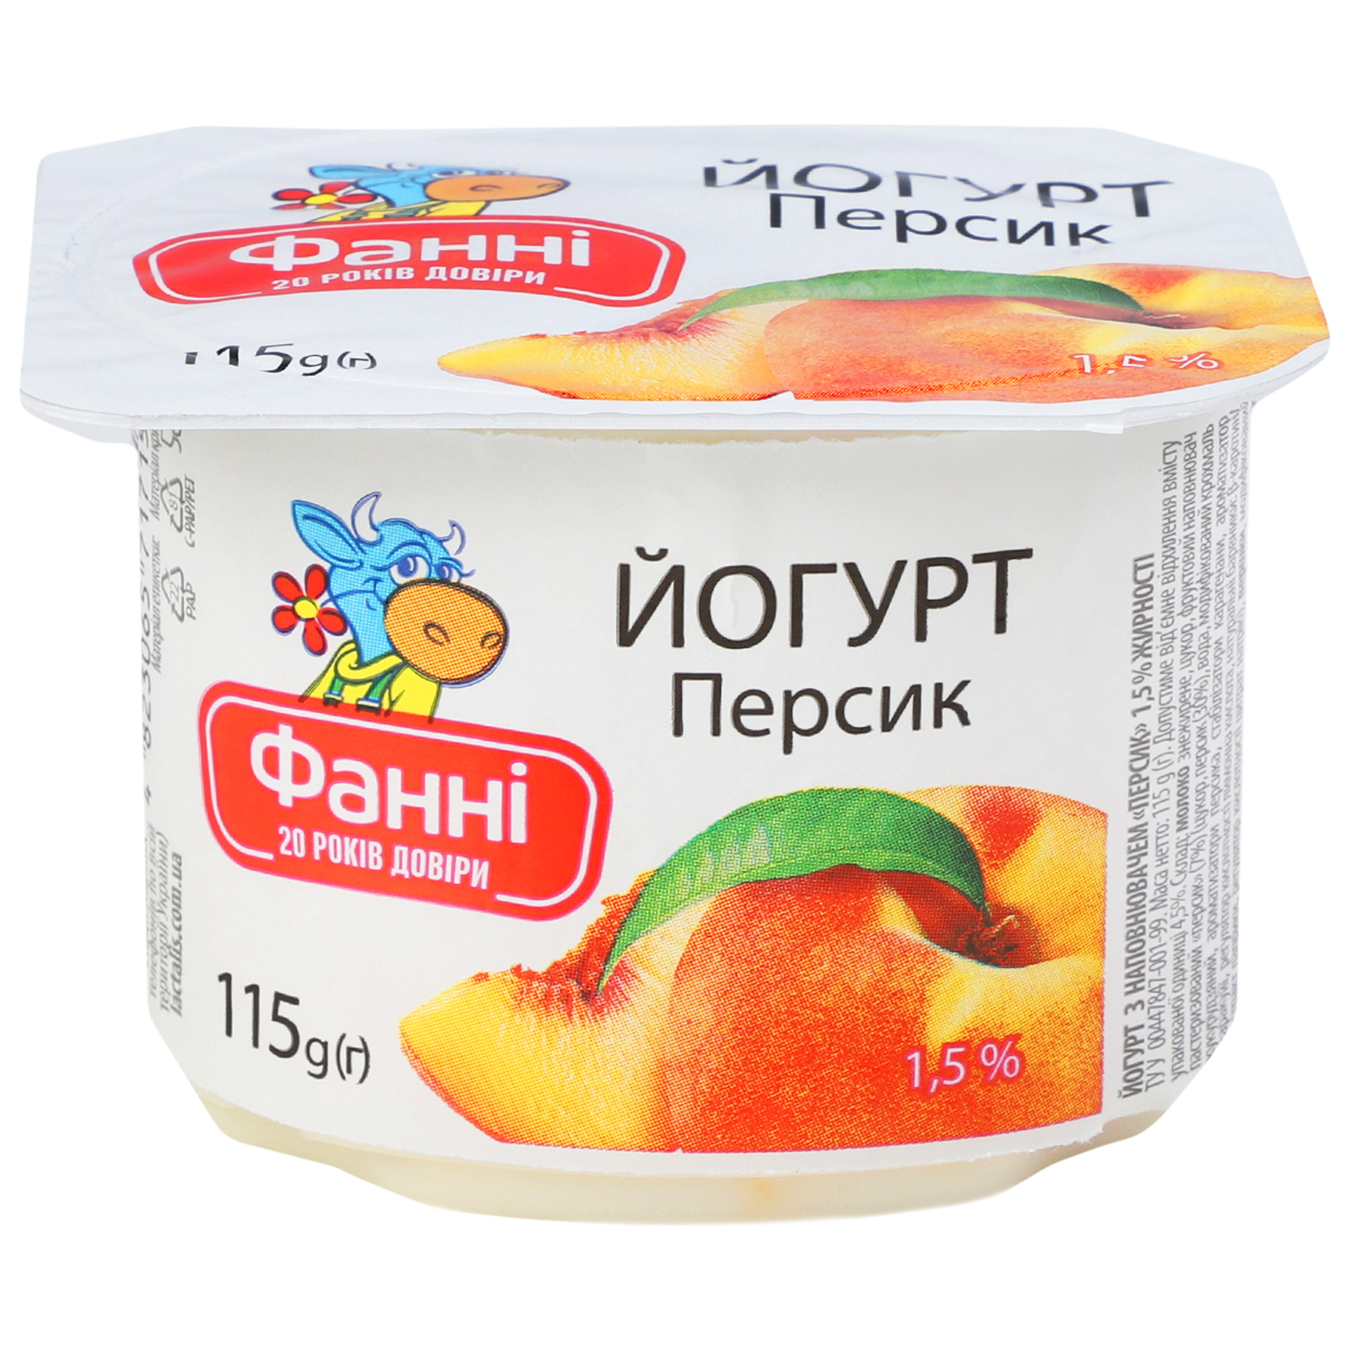 Fanny yogurt with peach filling cup 1.5% 115g 6